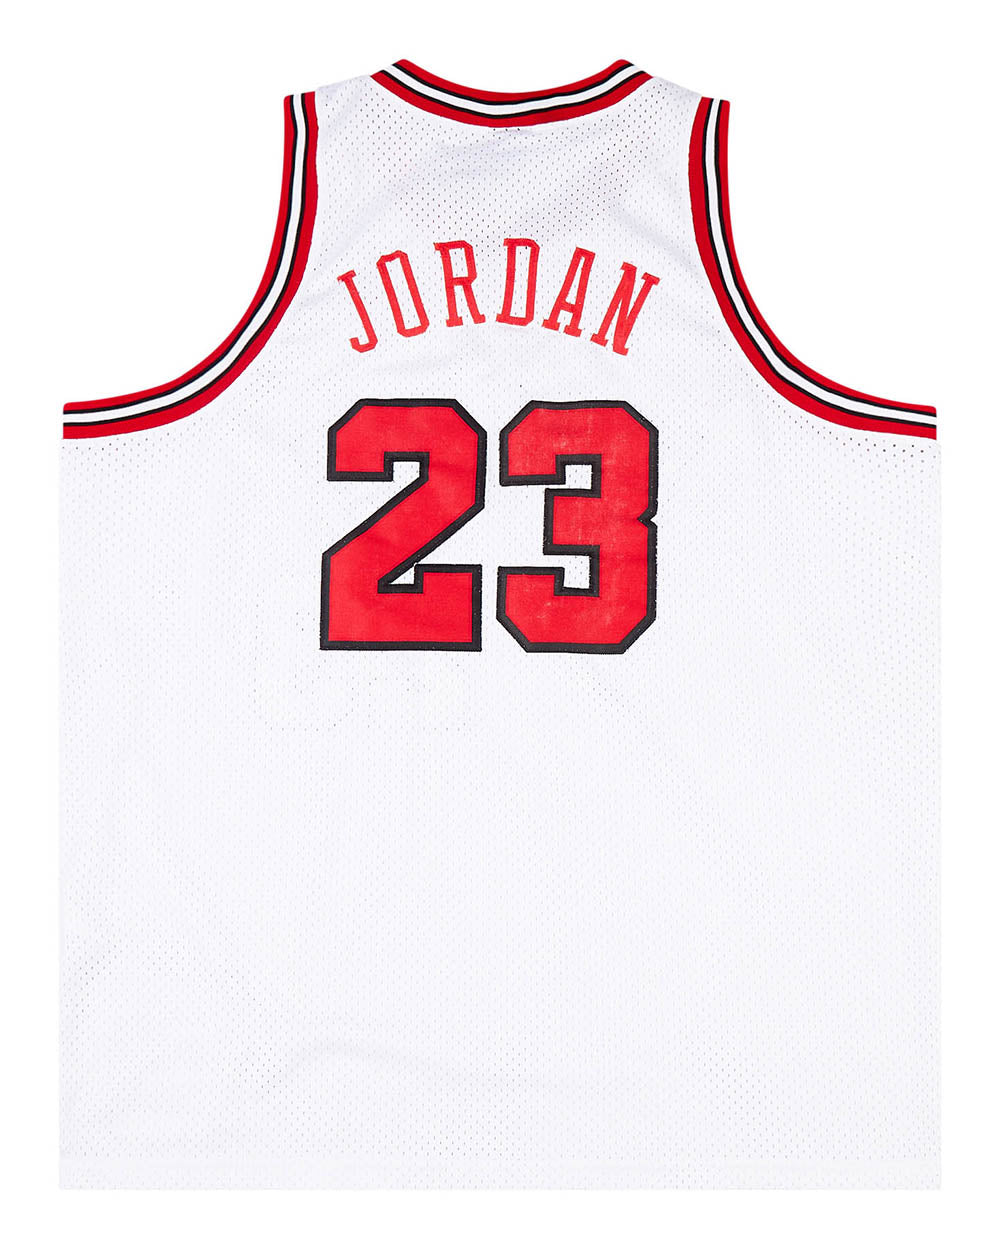 Vintage Nike NBA Chicago Bulls Michael Jordan Jersey Size 2XL 1984